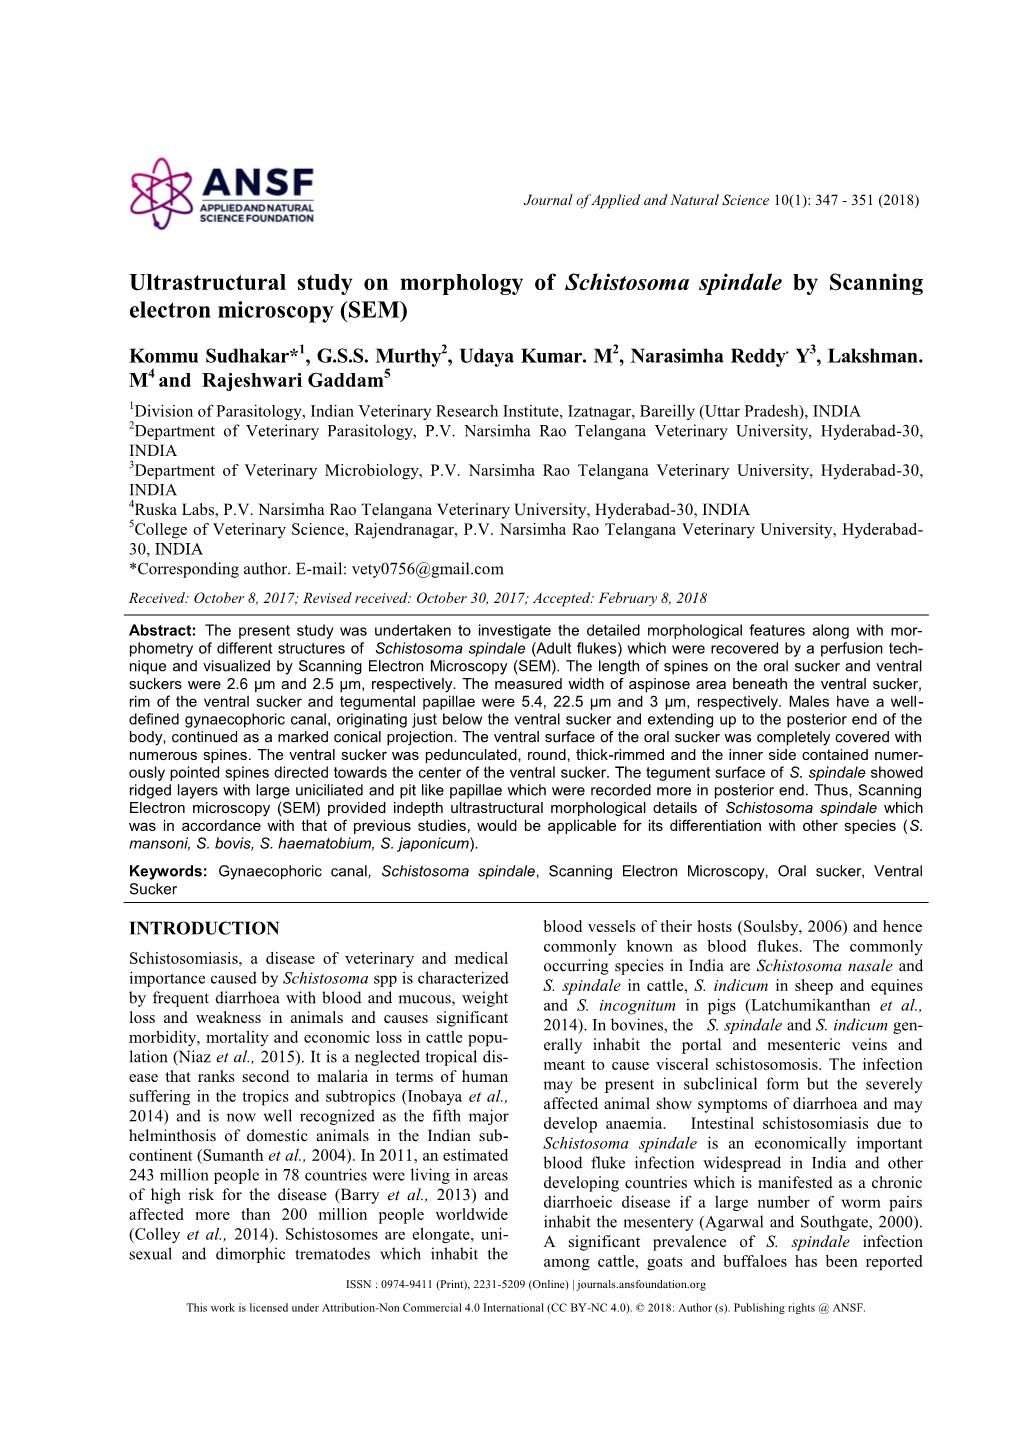 Ultrastructural Study on Morphology of Schistosoma Spindale by Scanning Electron Microscopy (SEM)